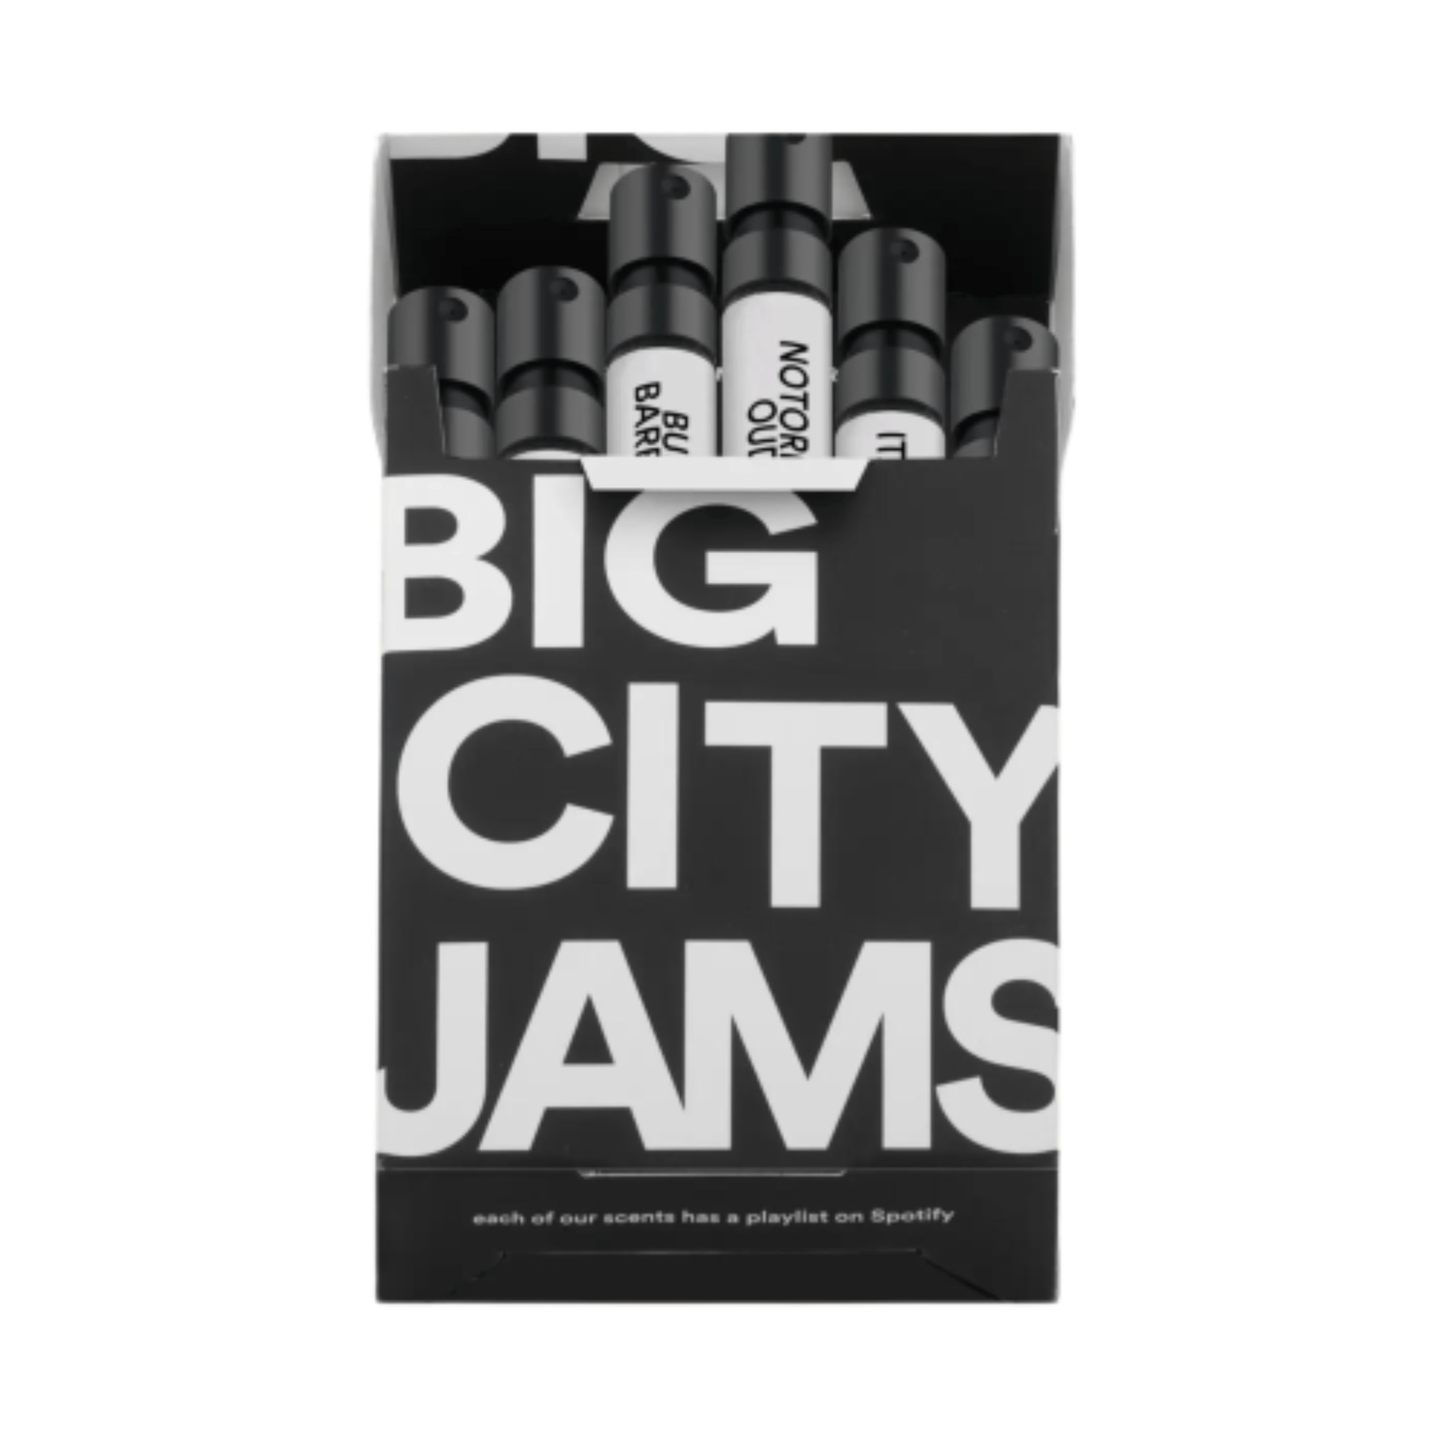 Primary Image of Big City Jams